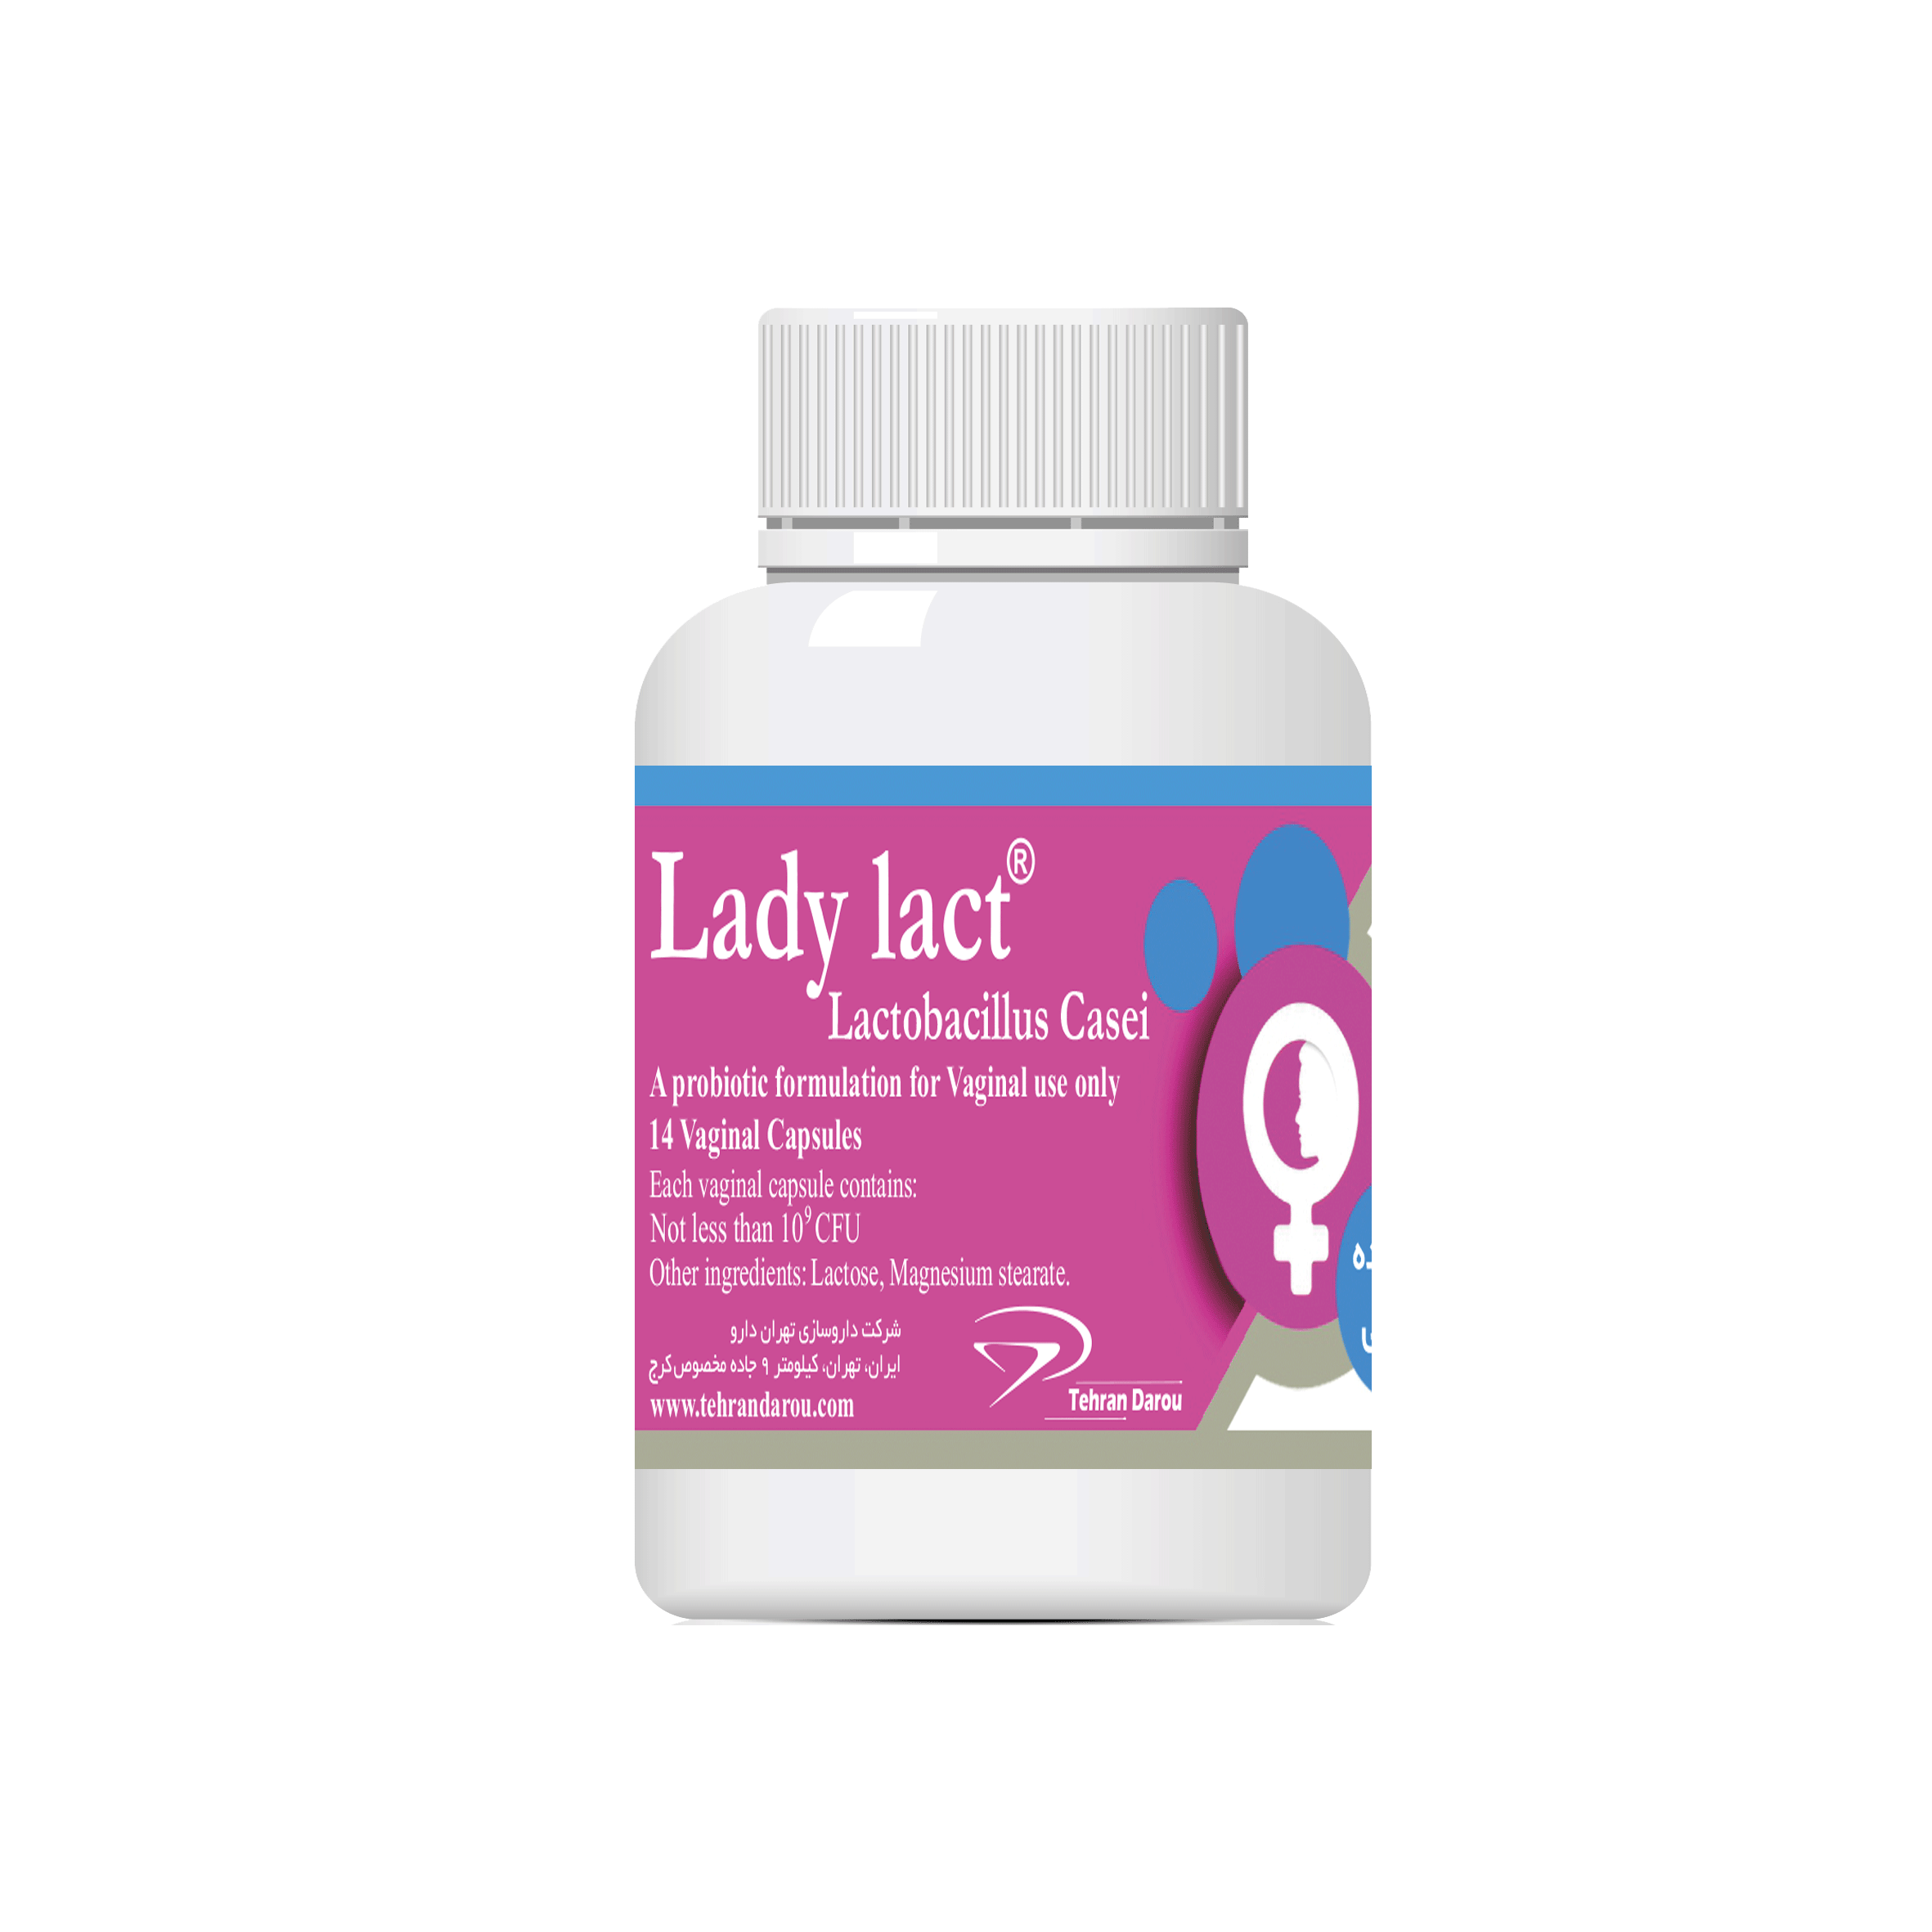 LadyLact®, Precision Probiotics Redefining Feminine Wellness